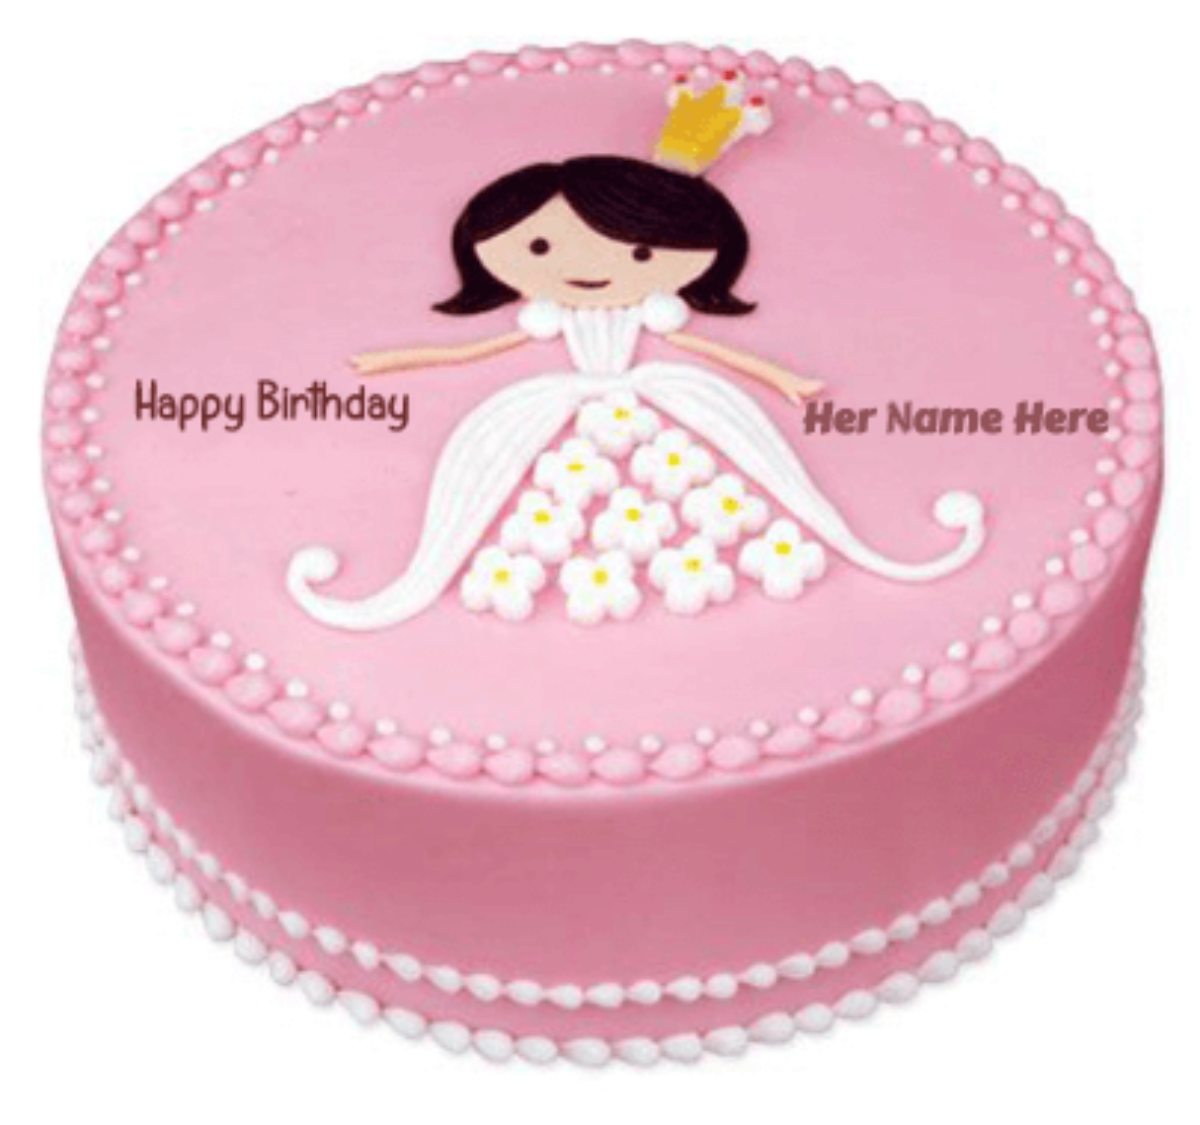 Baby Girl 1st Birthday Cakes ᴷᴬ - Architecture & Design | Facebook